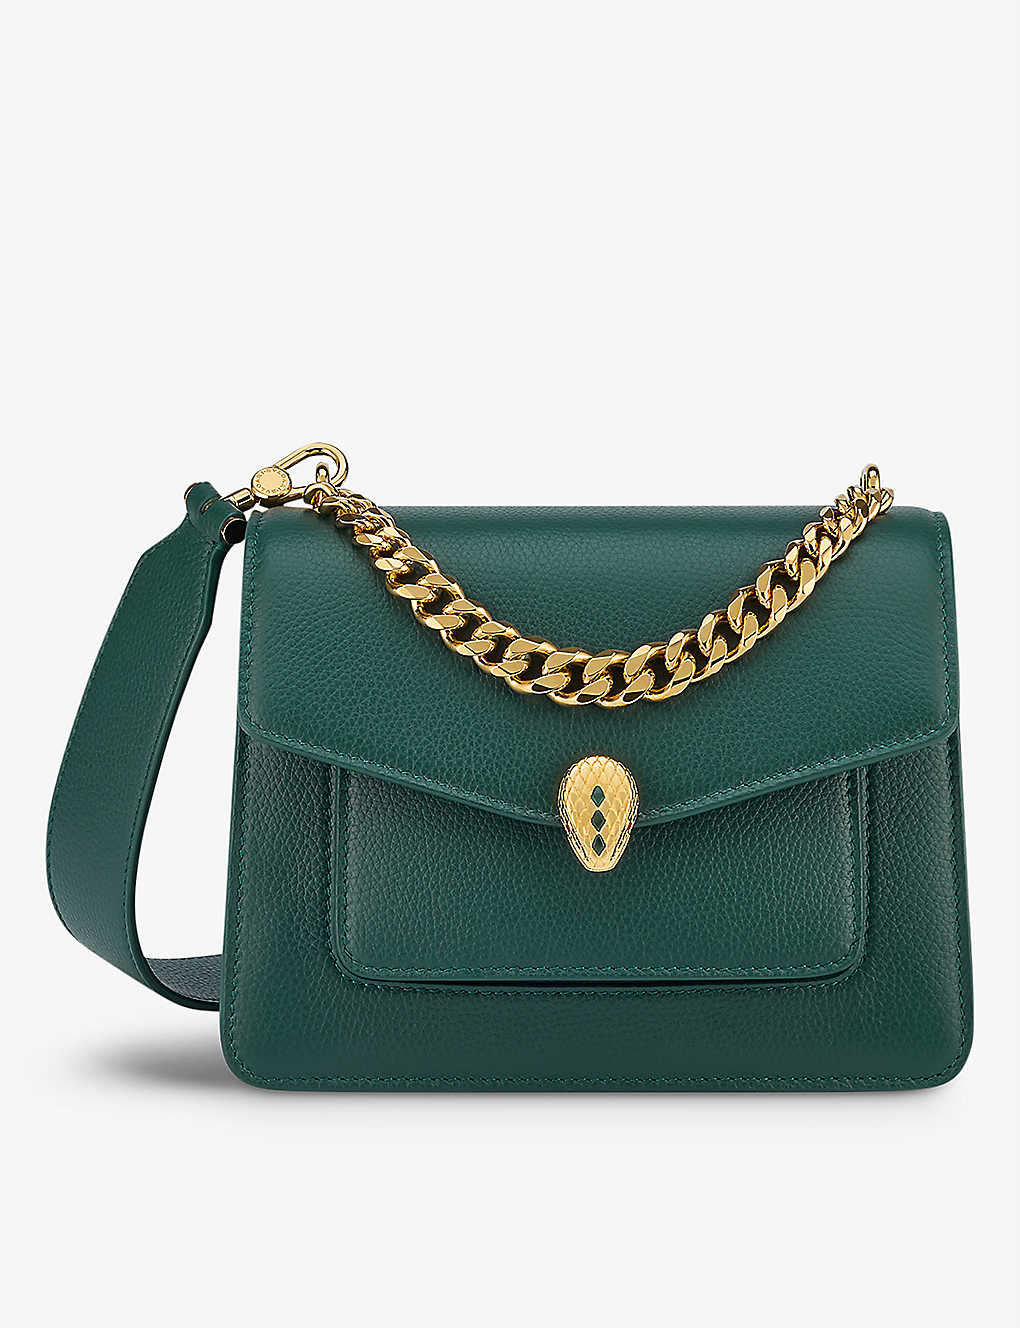 Bvlgari Women's Serpenti Maxi Chain Leather Shoulder Bag In Forest Emerald